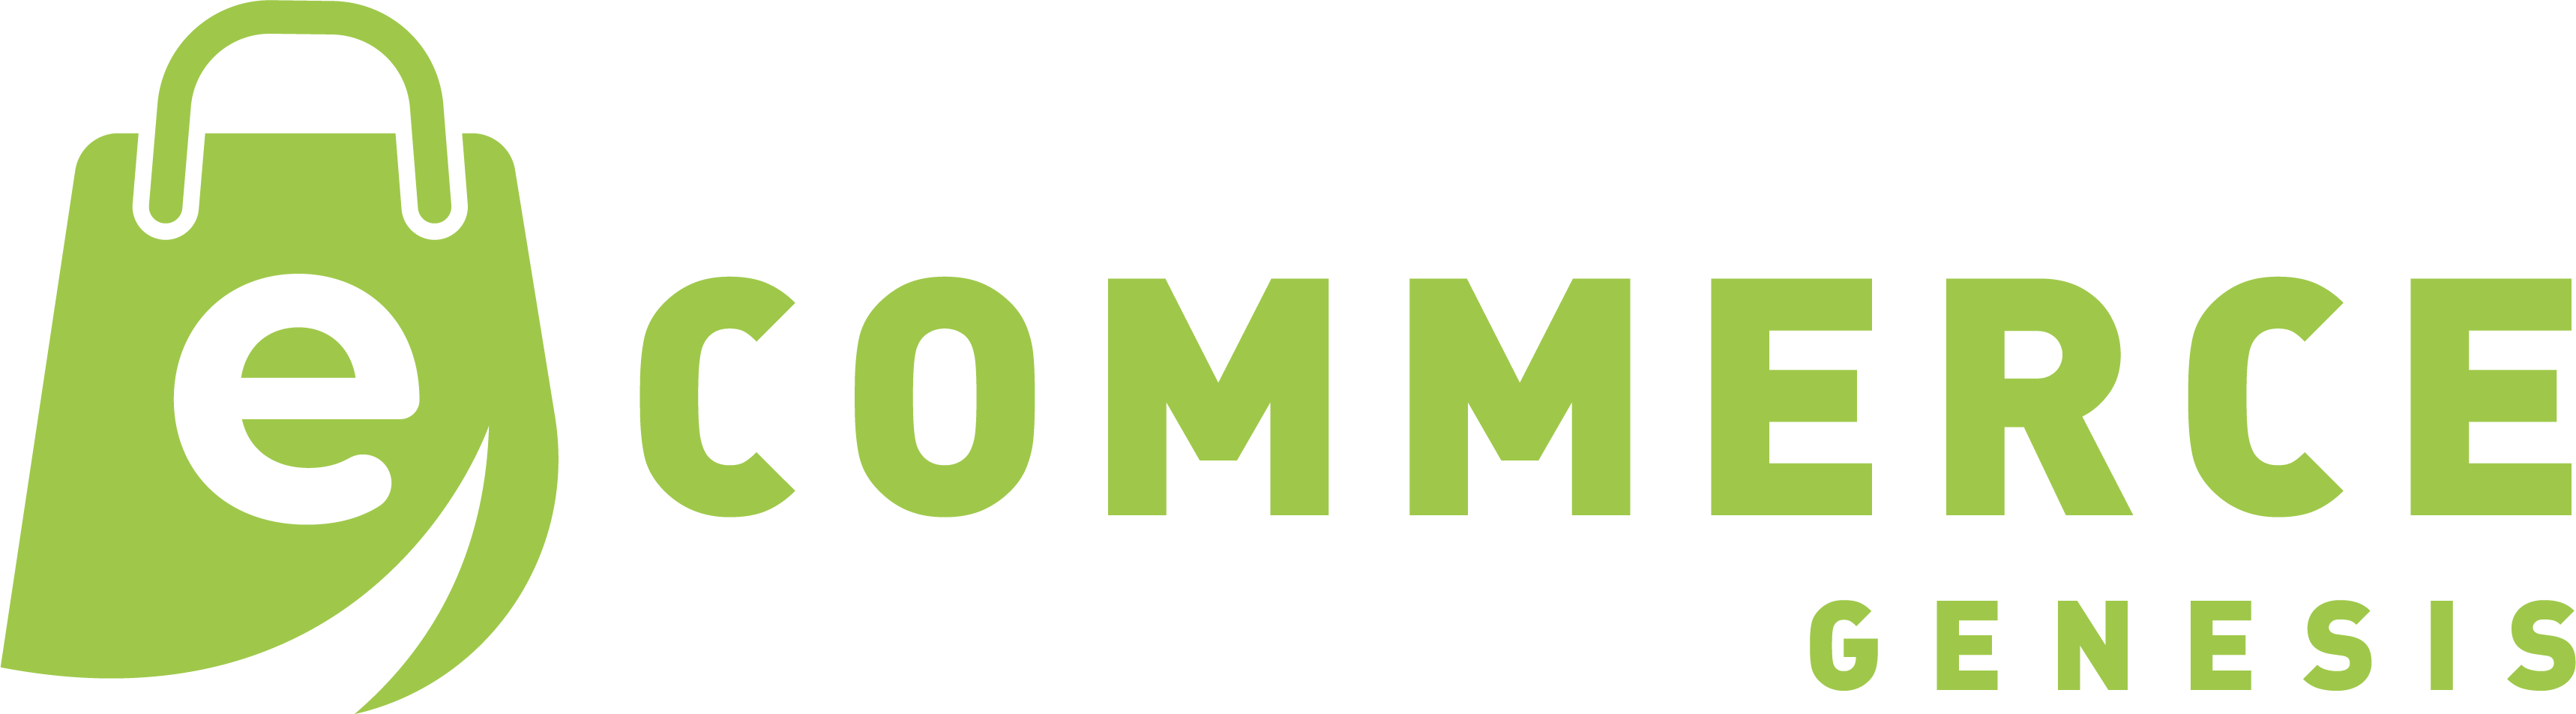 eCommGen logo green